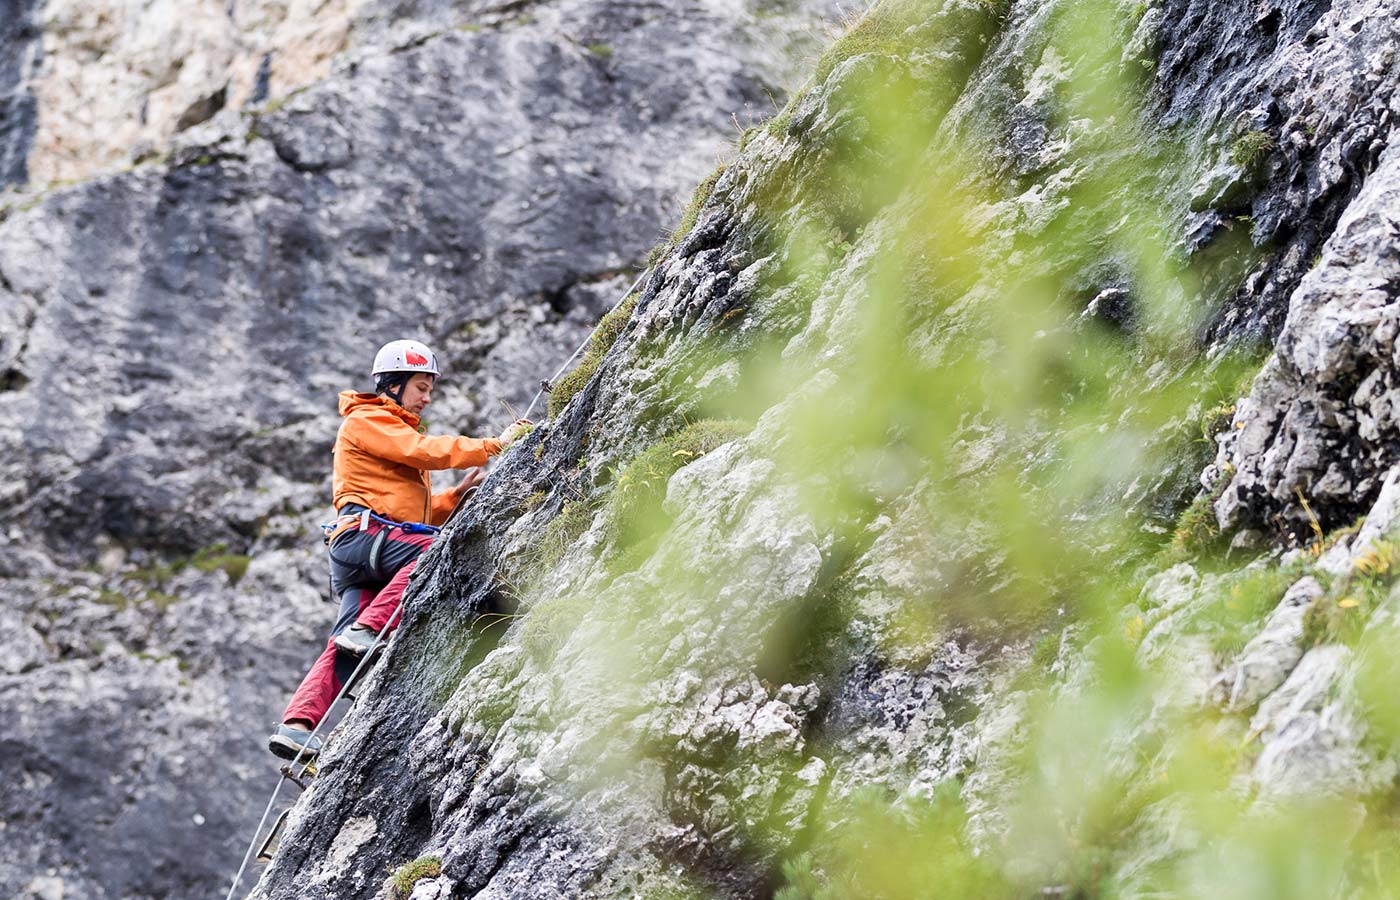 Armin, the expert climber, on a mountain wall